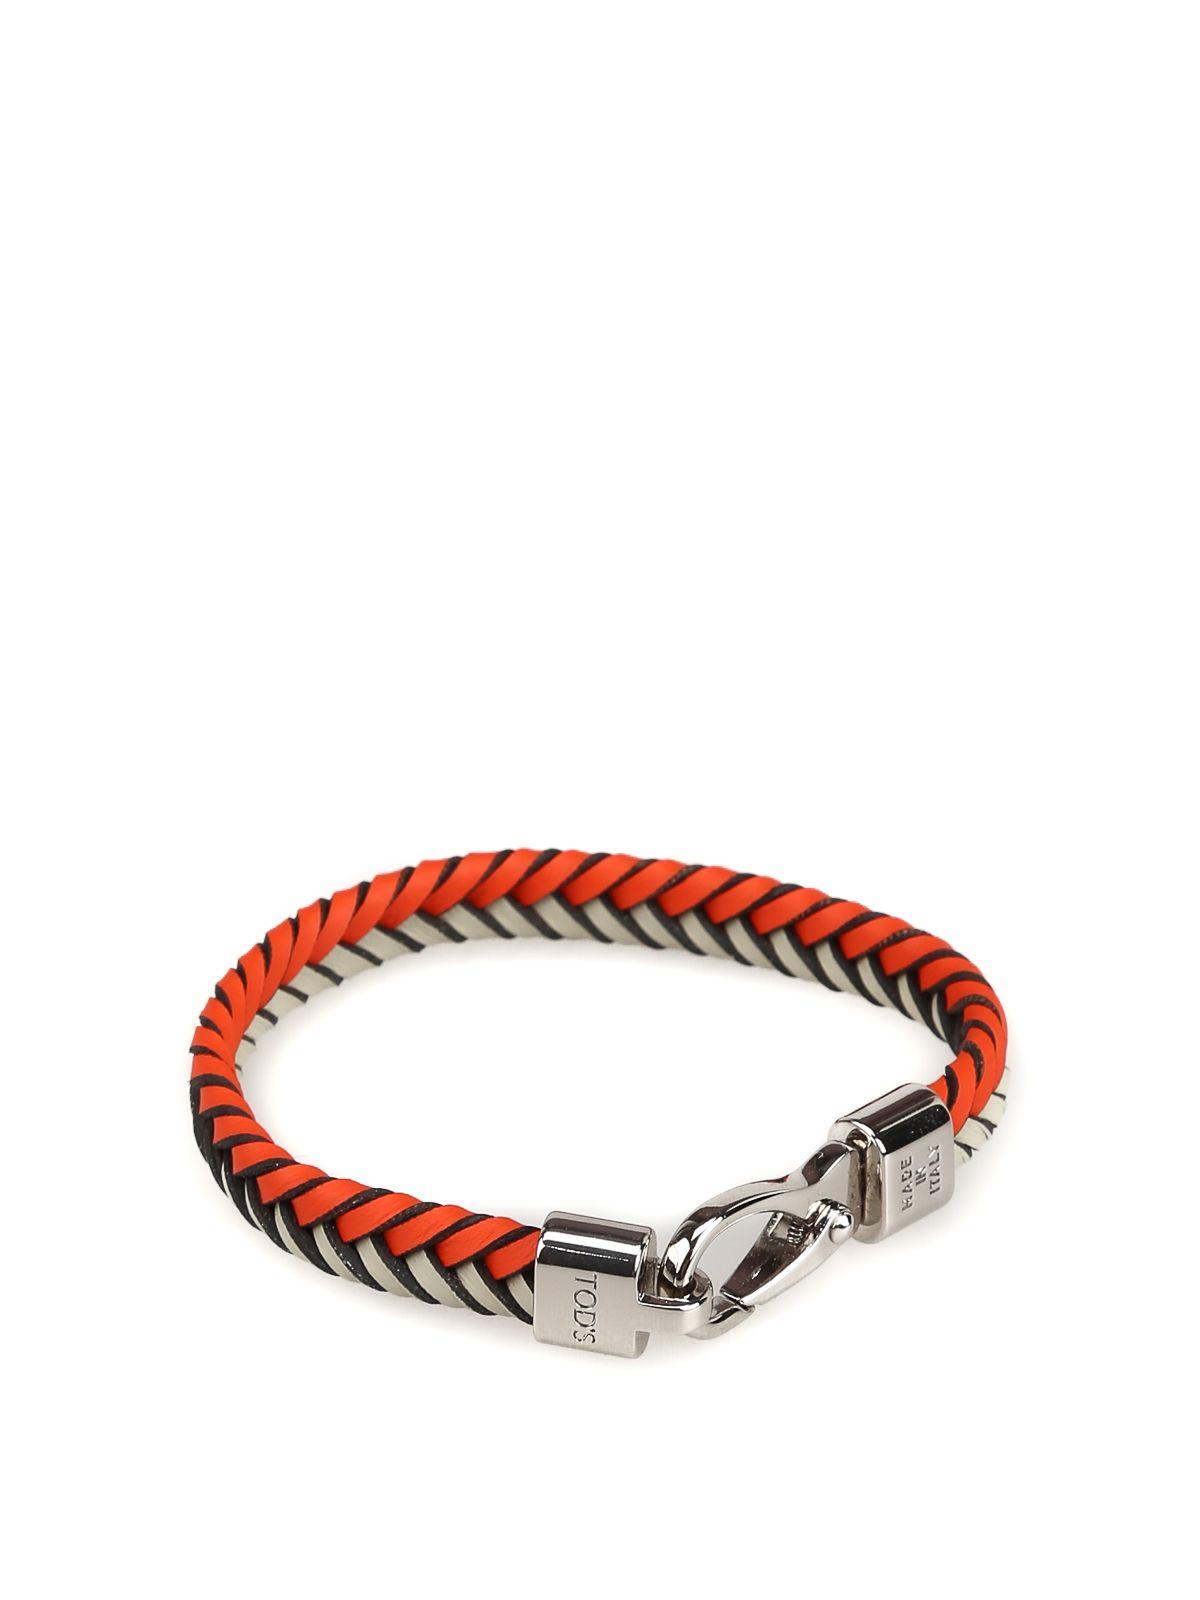 Tod's Multicolor Leather Bracelet in Brown for Men - Lyst